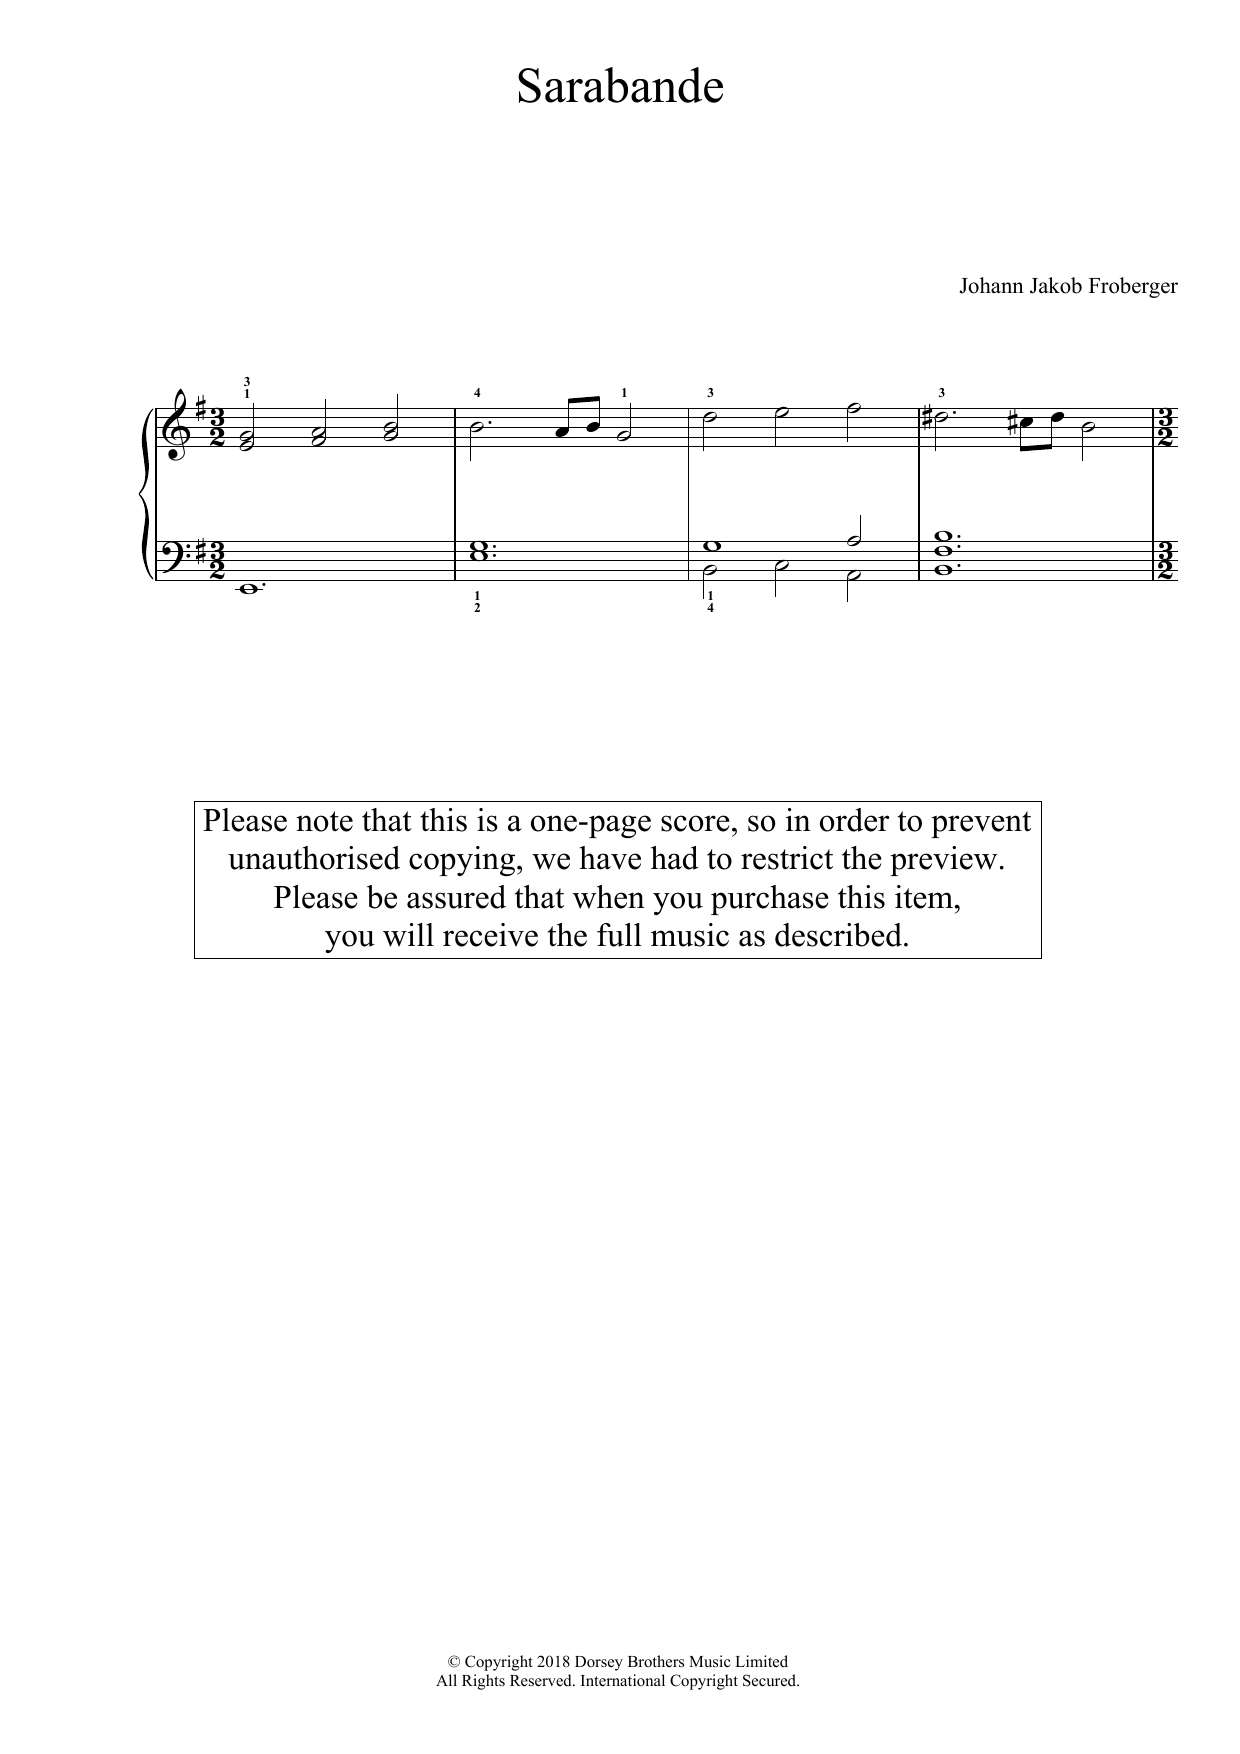 Johann Jakob Froberger Sarabande Sheet Music Notes & Chords for Piano - Download or Print PDF